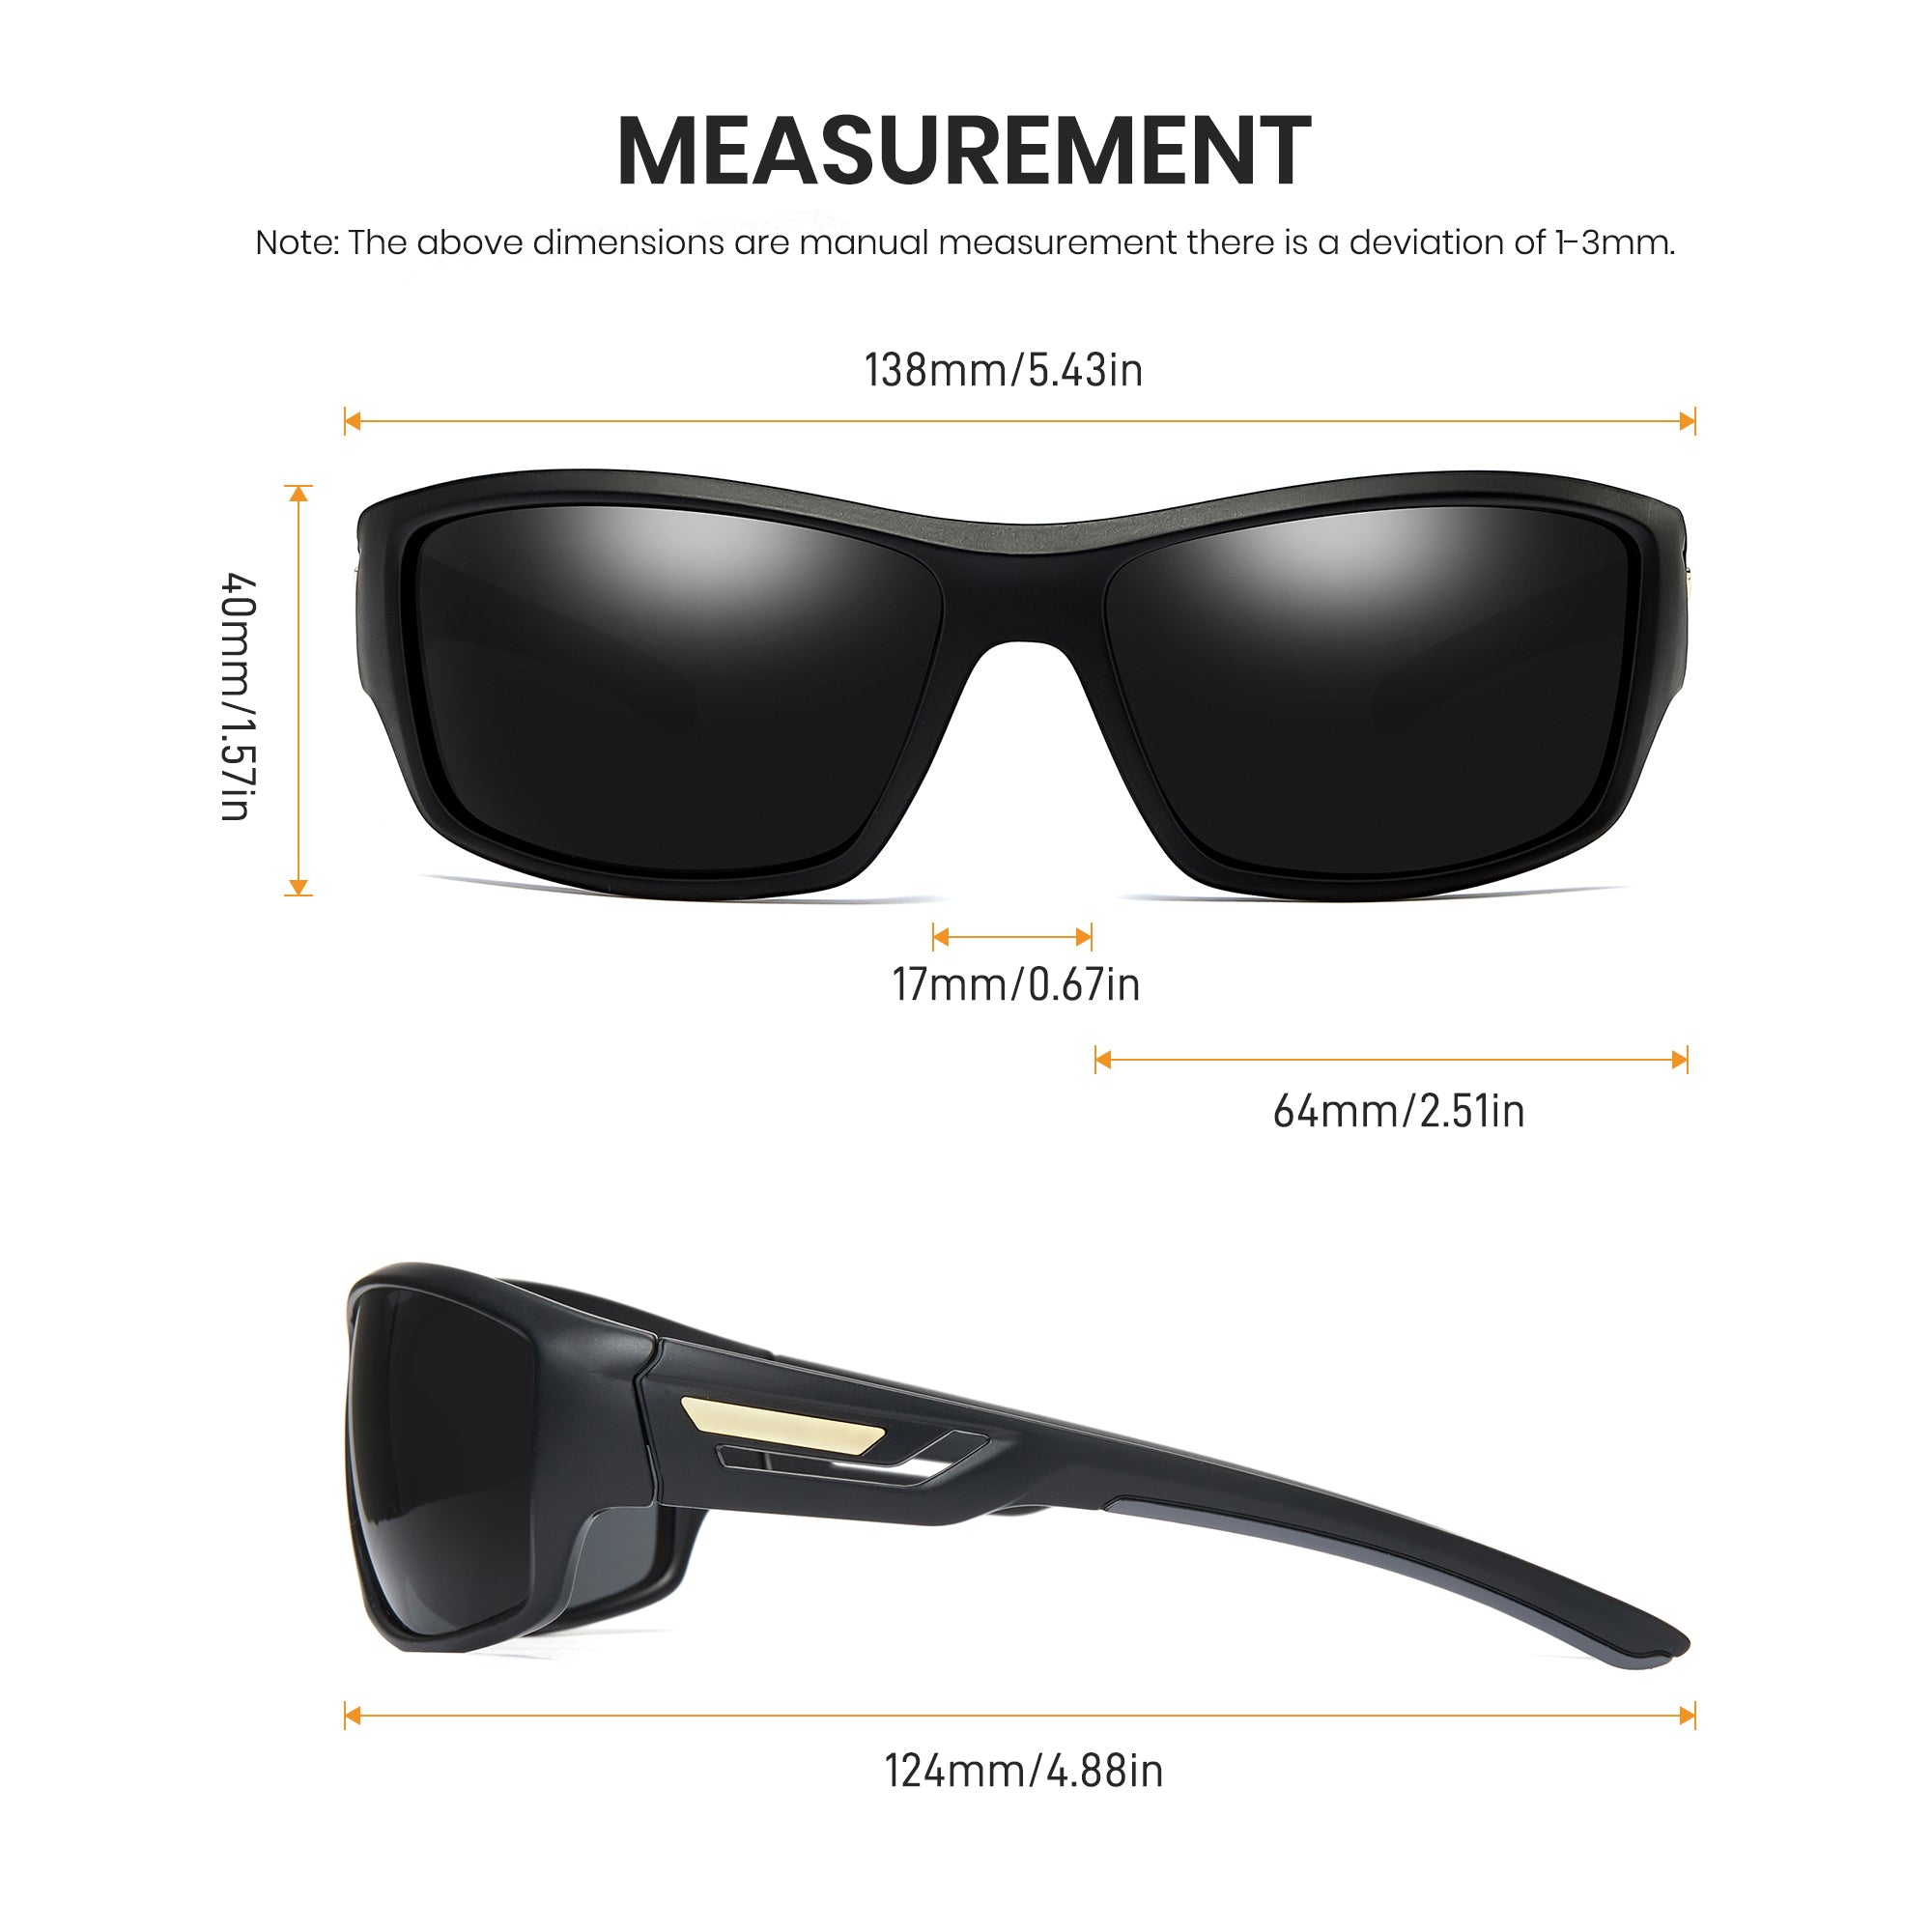 Polarized Sport Sunglasses 1070